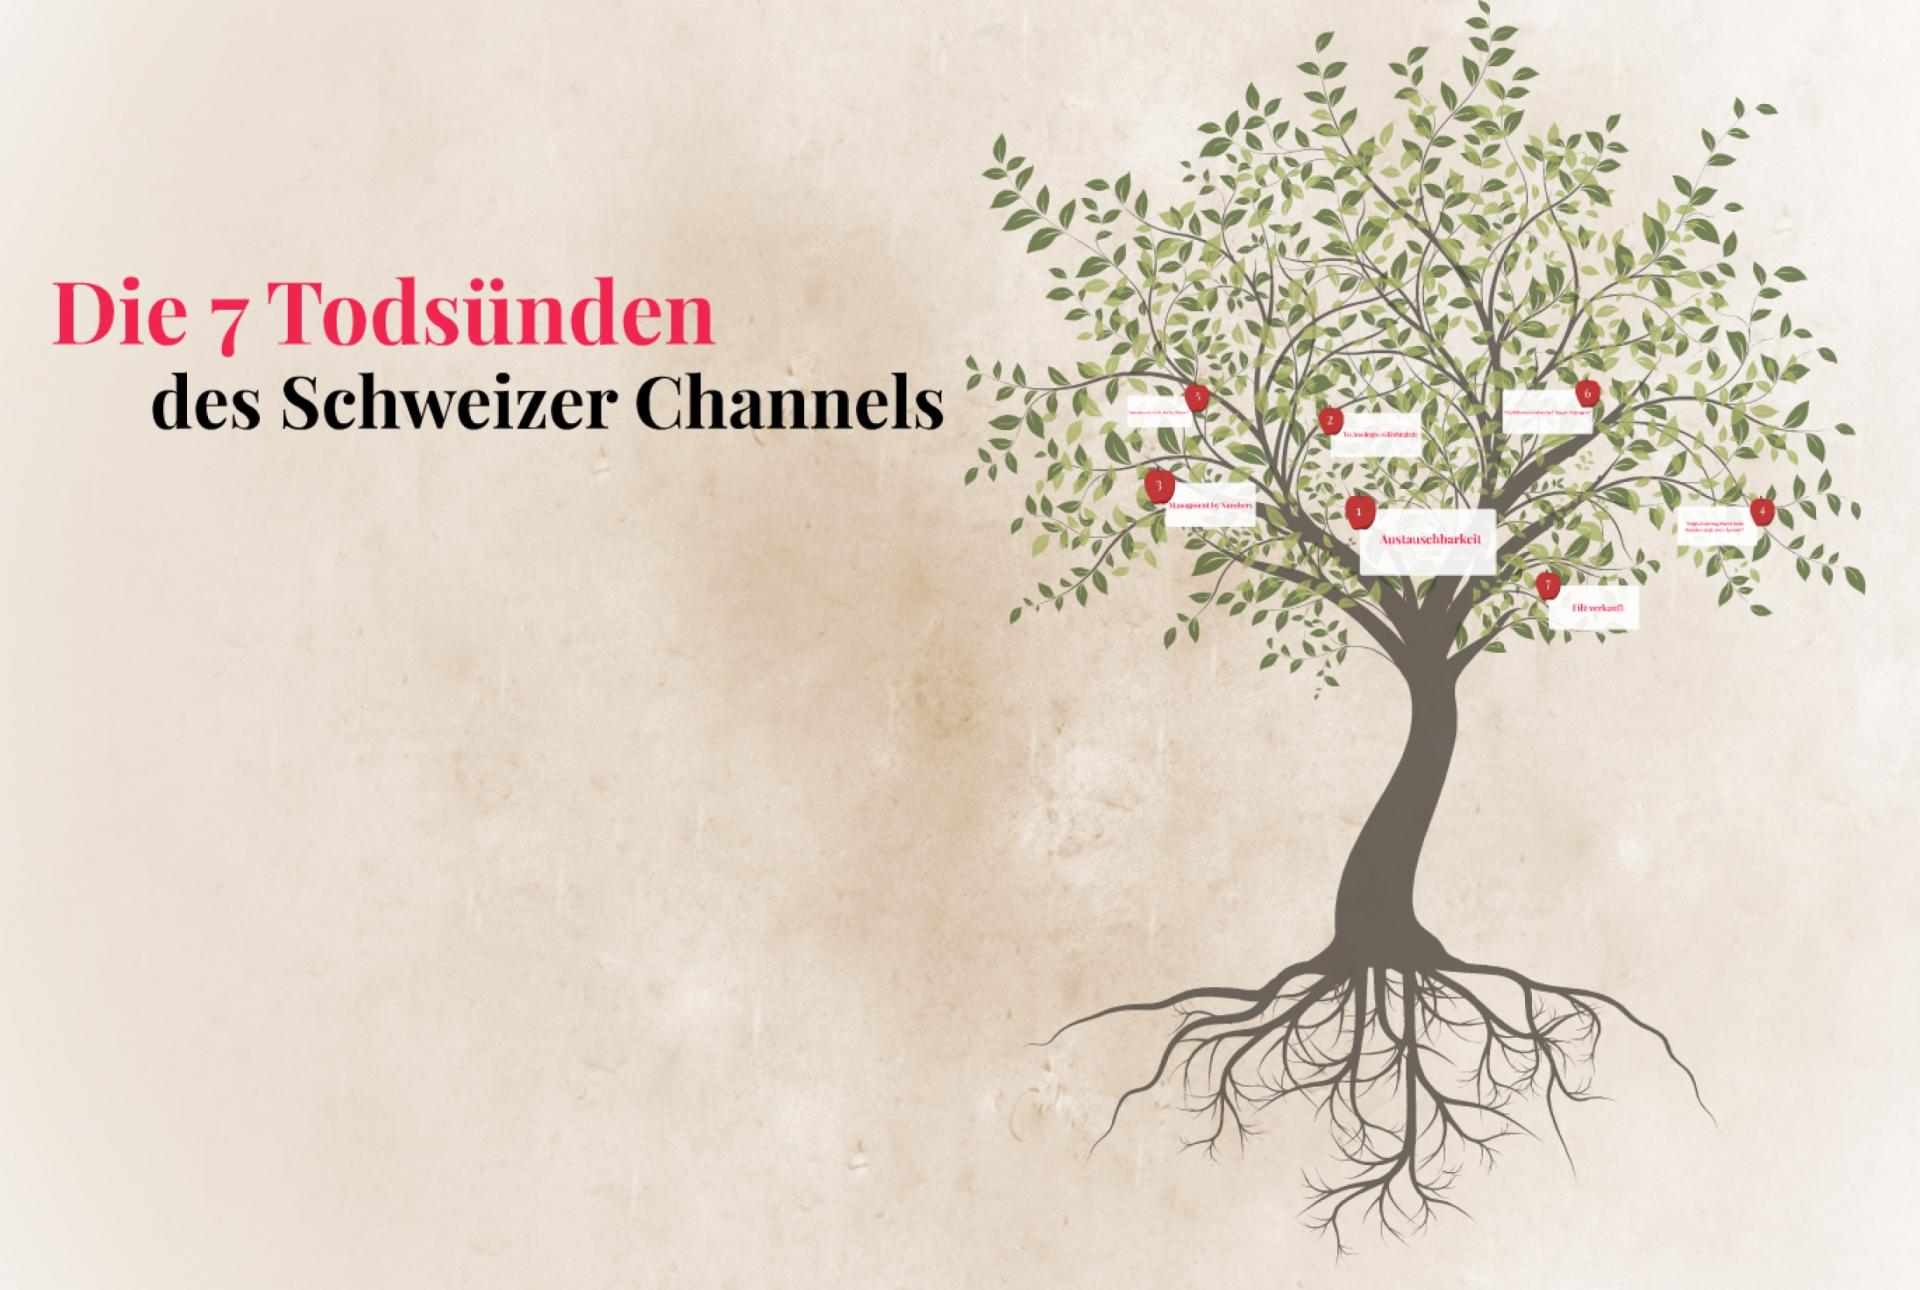 7 Todsuenden-channel